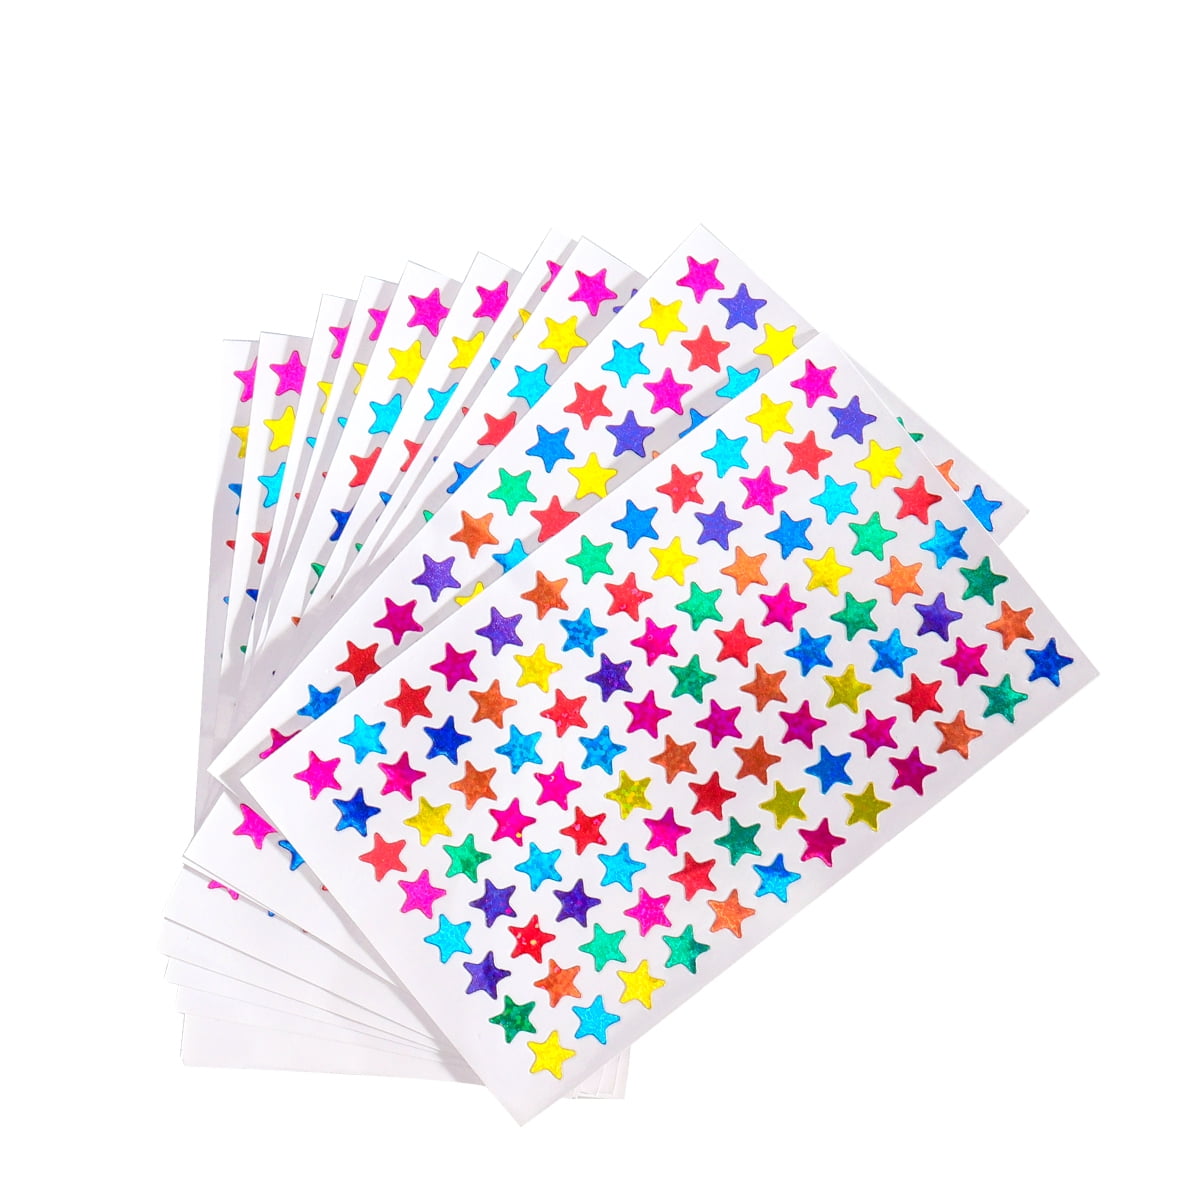 10 Sheets 420 Pieces Gold Glitter Star Sticker Self Adhesive Assorted Star  Sticker Label Shiny Reward Star Sticker for Classroom Teacher Supplies